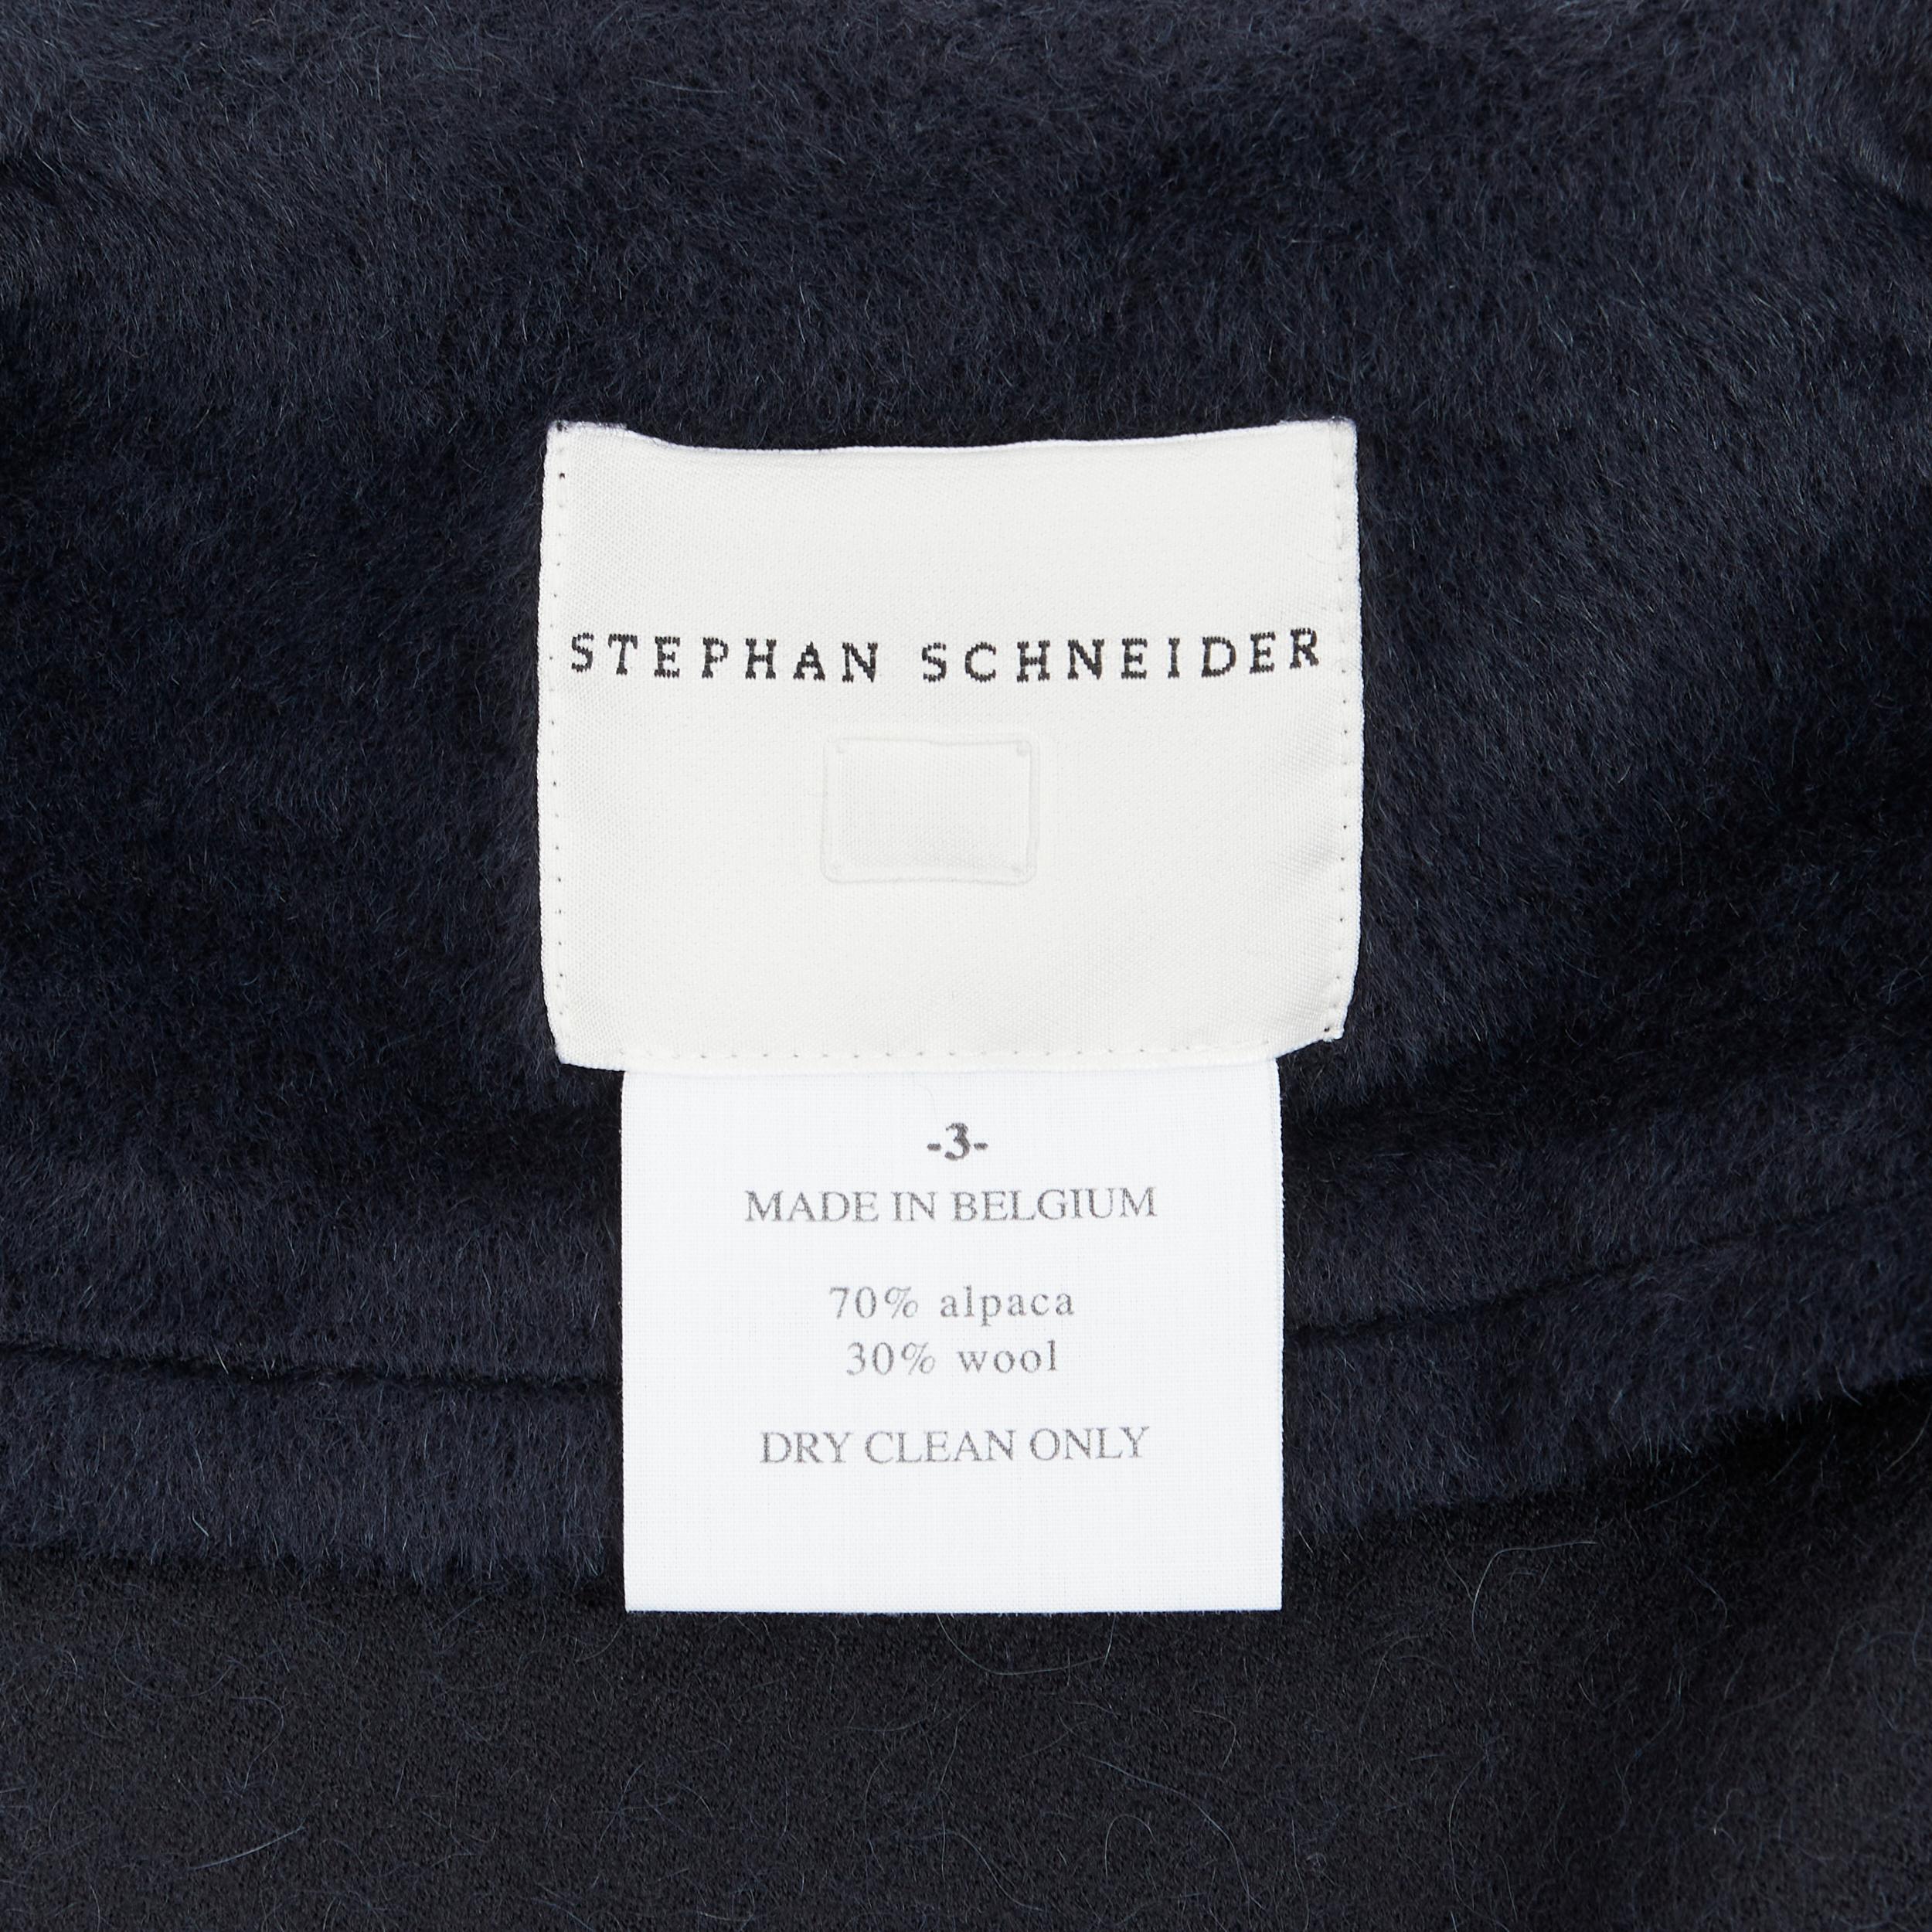 STEPHAN SCHNEIDER black alpaca wool notched collar overcoat shirt 3 M 1